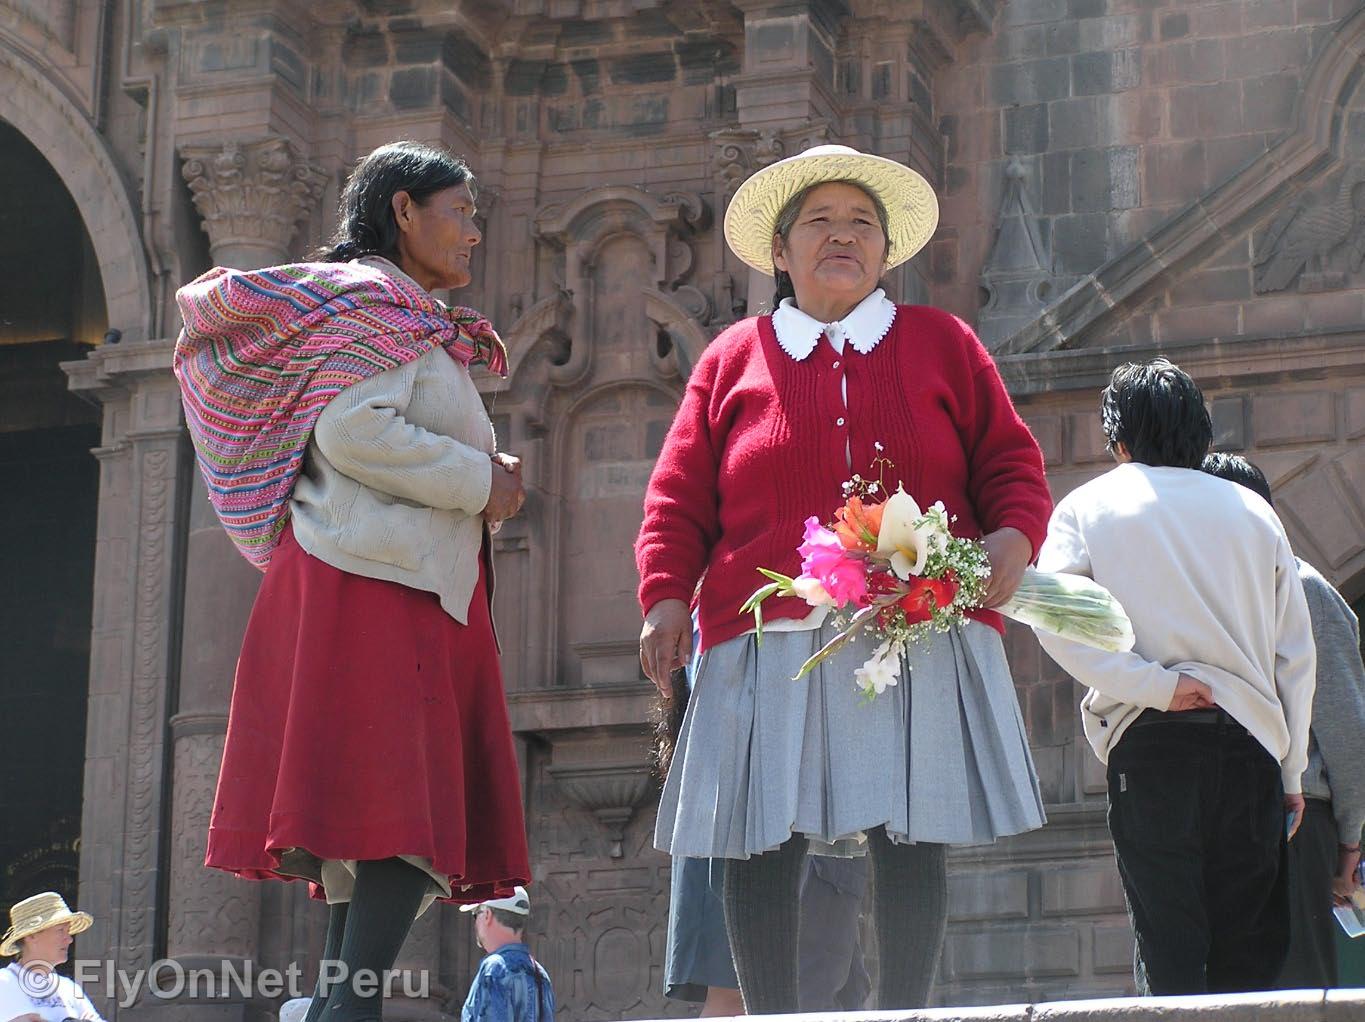 Photo Album: Women from Cusco